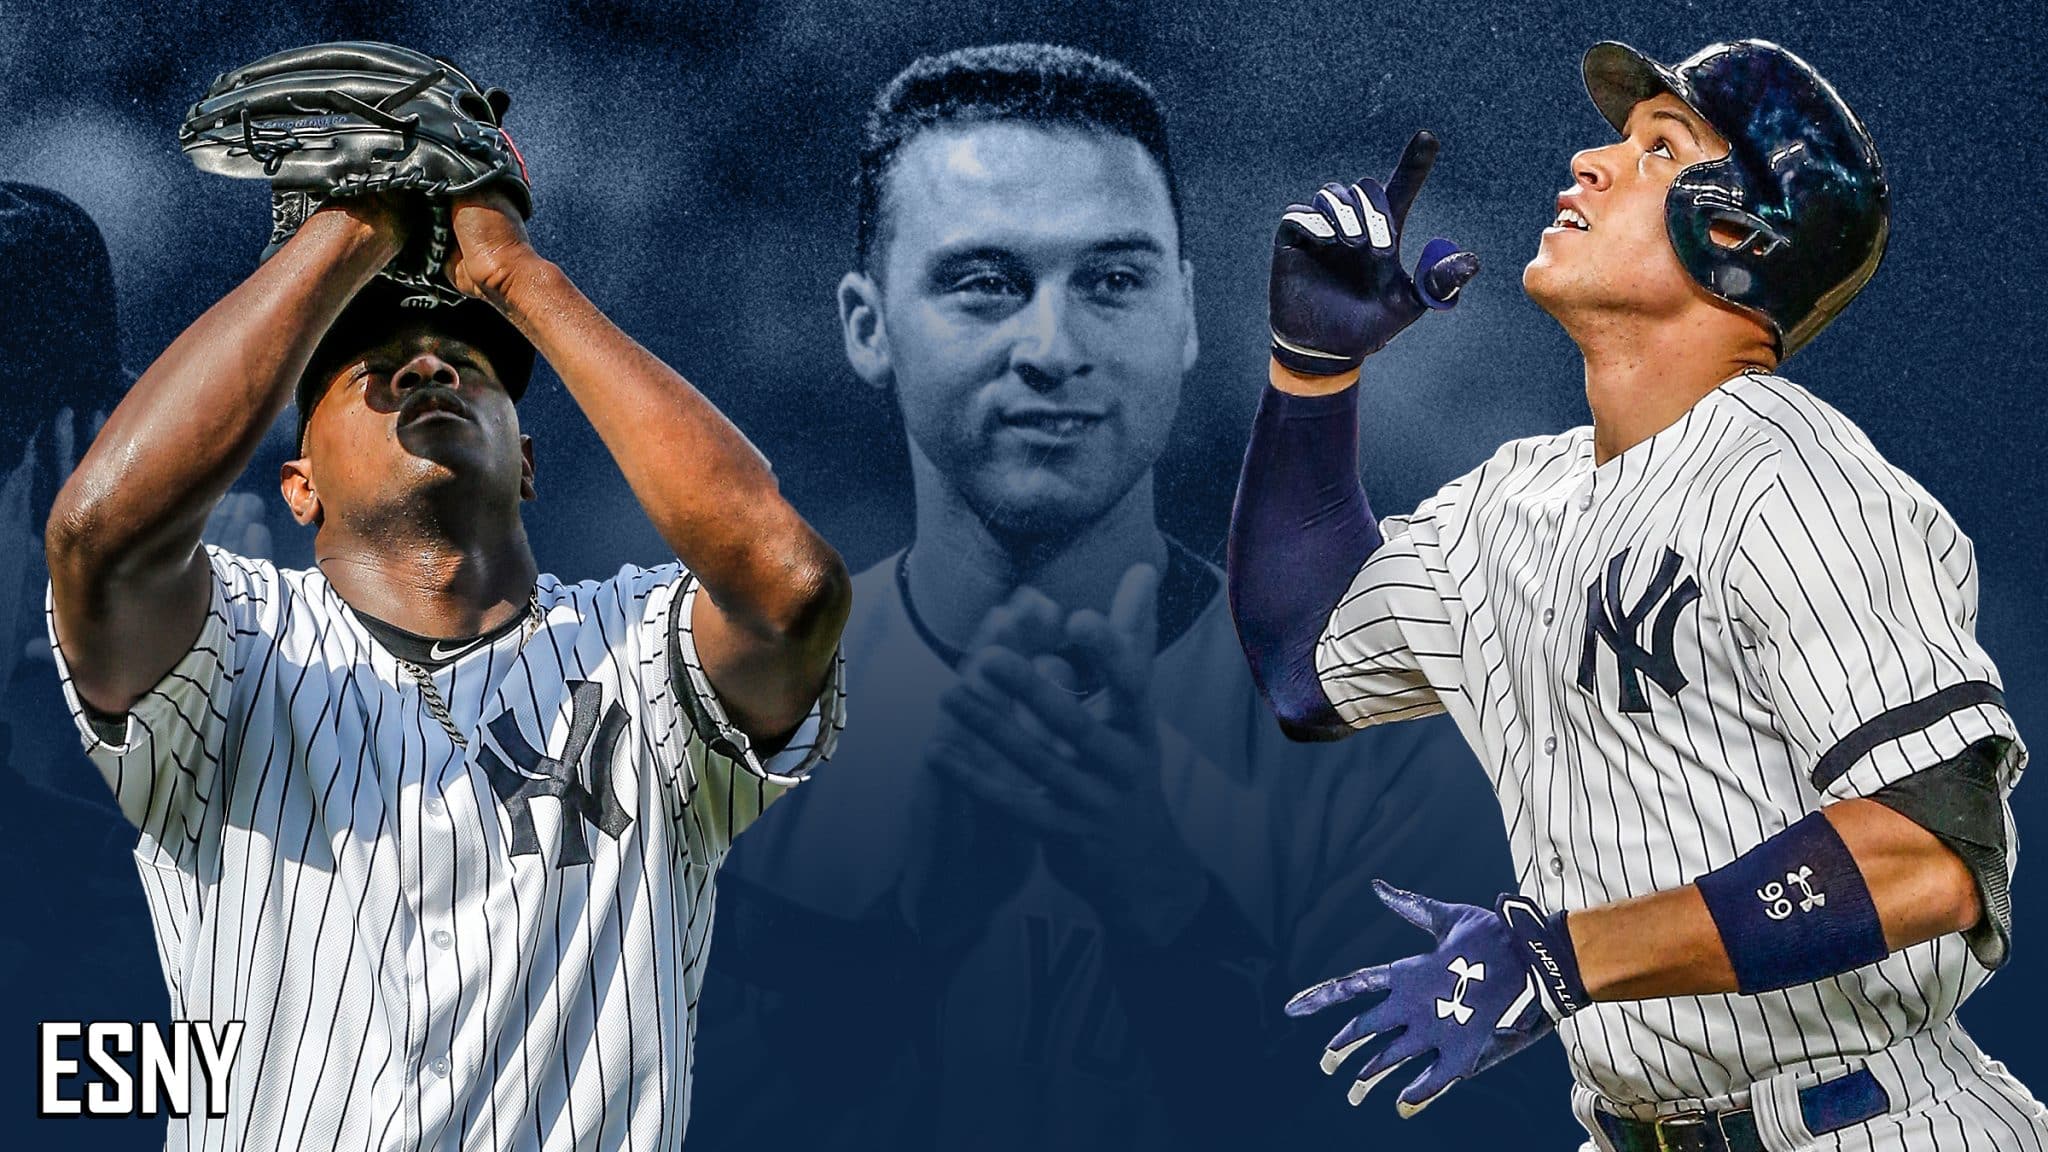 Yankees 2020 Wallpapers